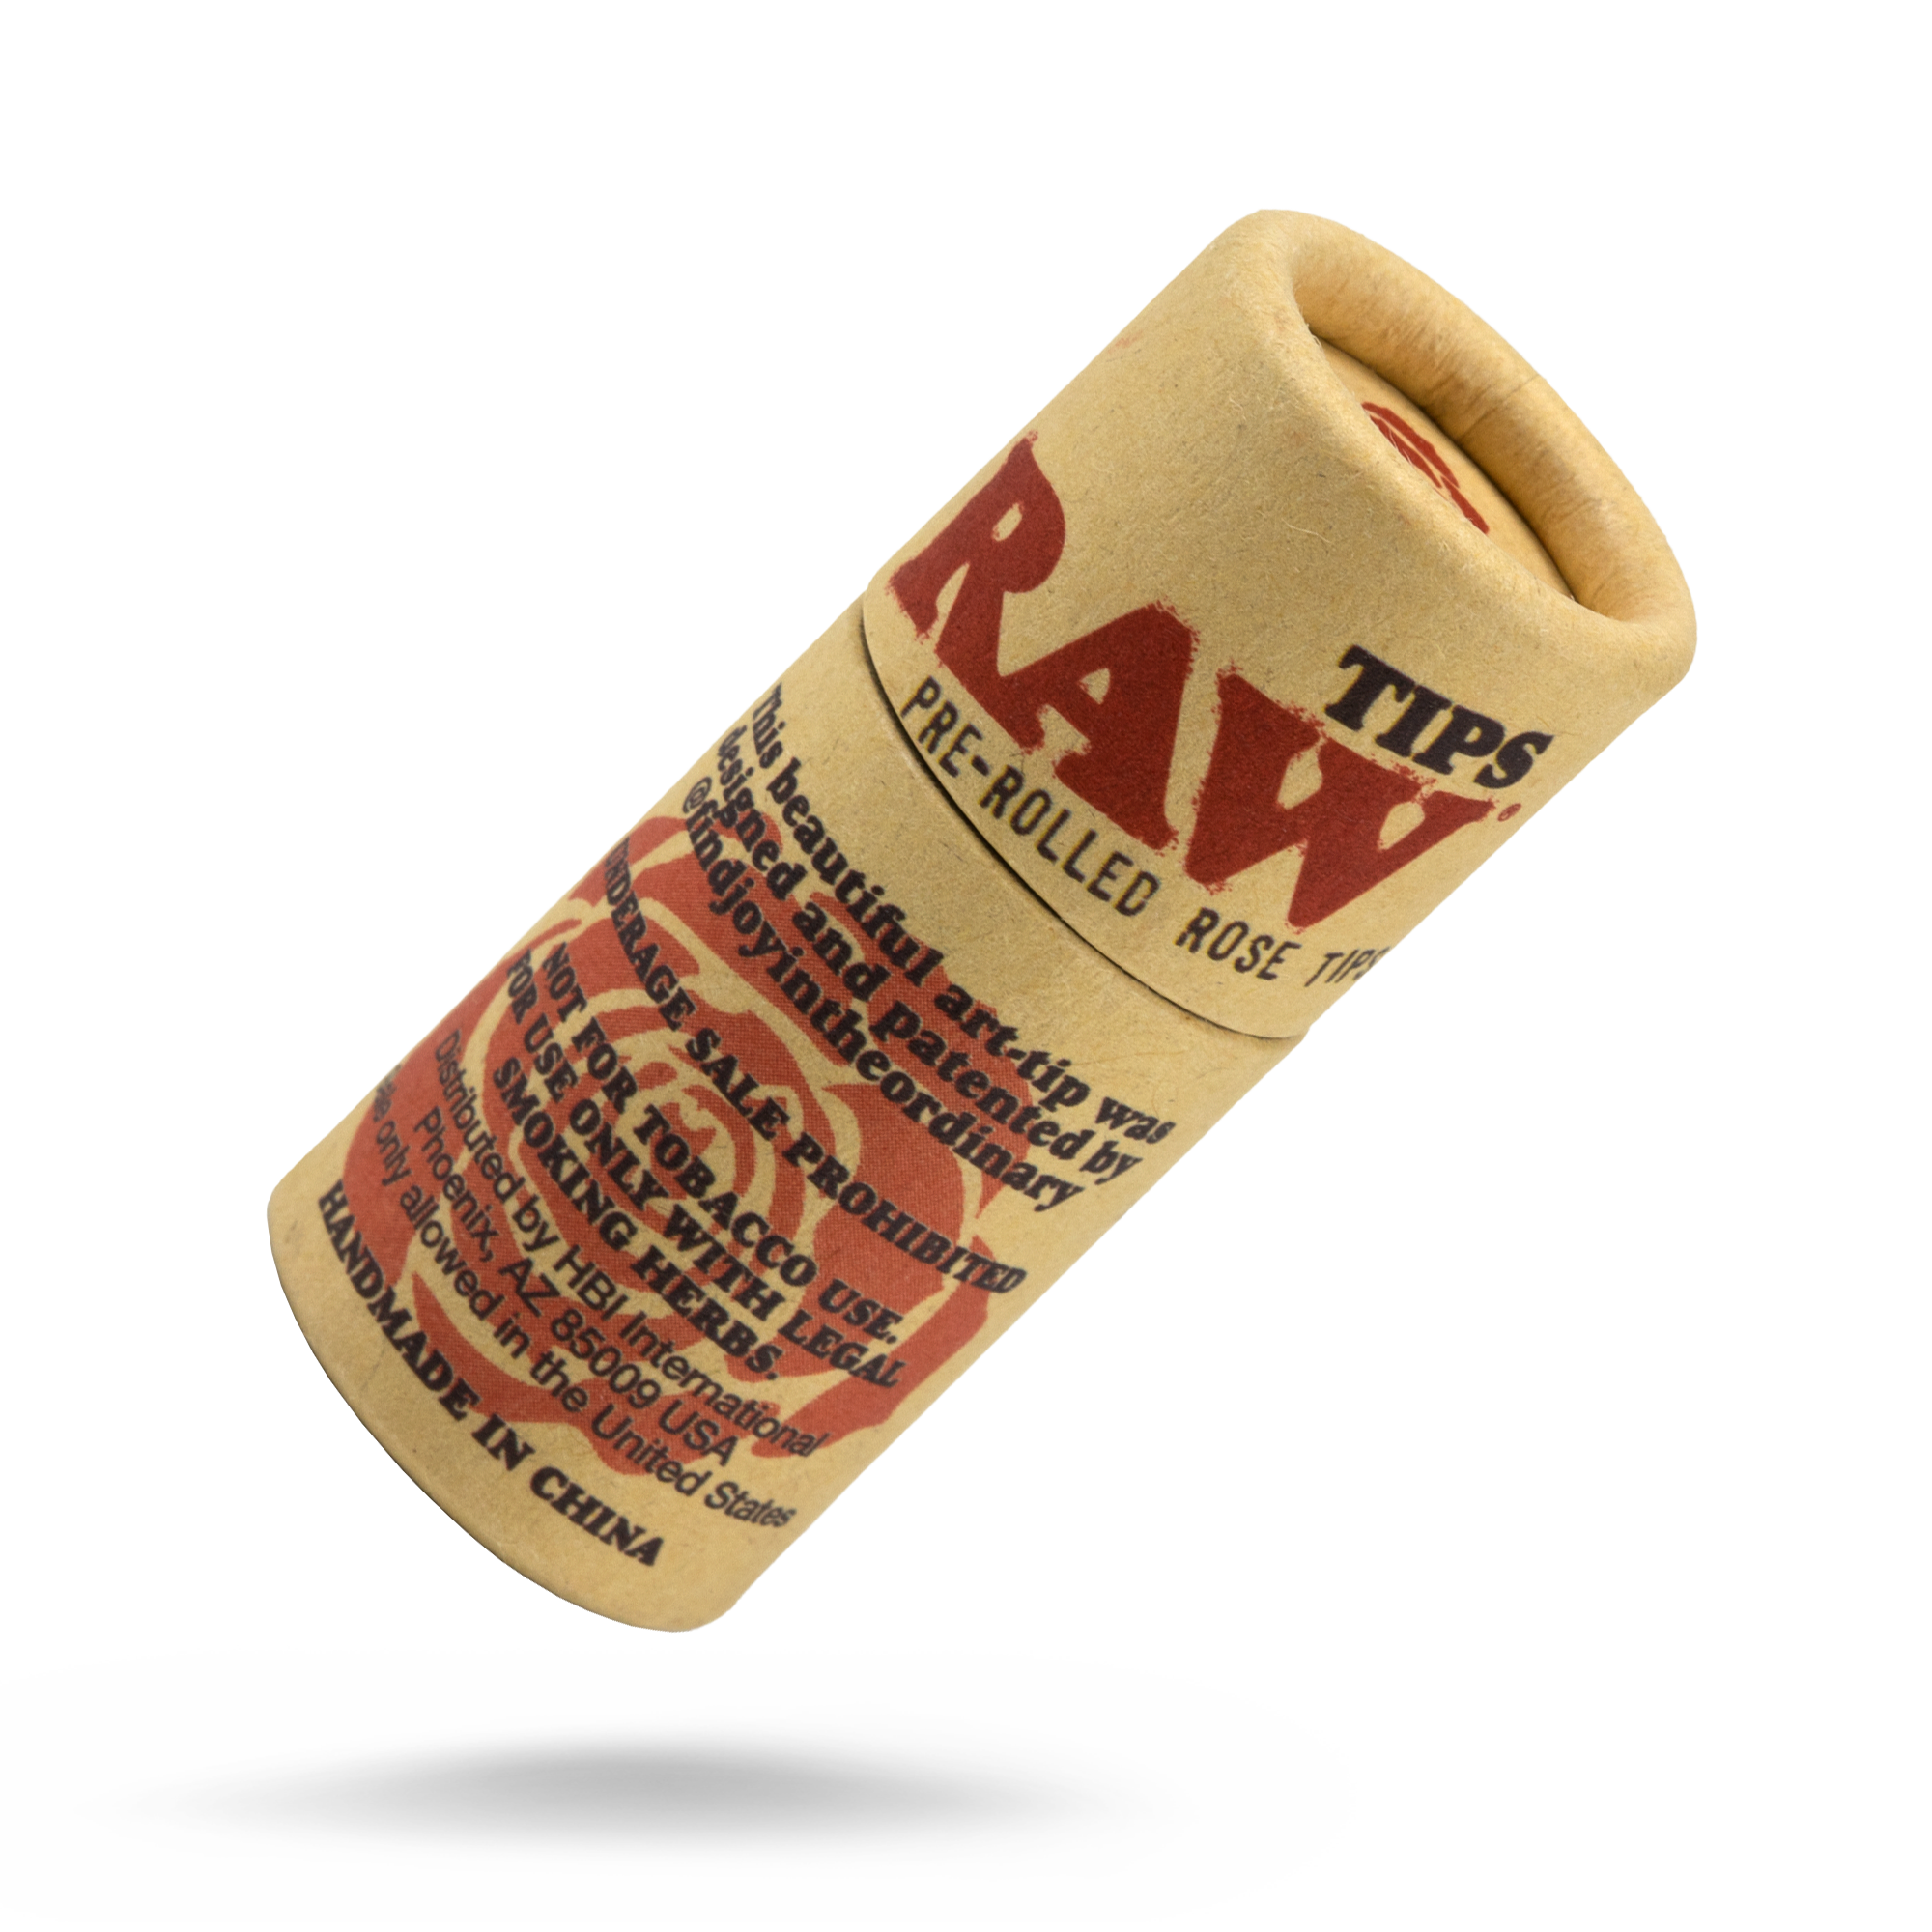 Buy Raw Black Pre-Rolled Cigarette filter Tips Online